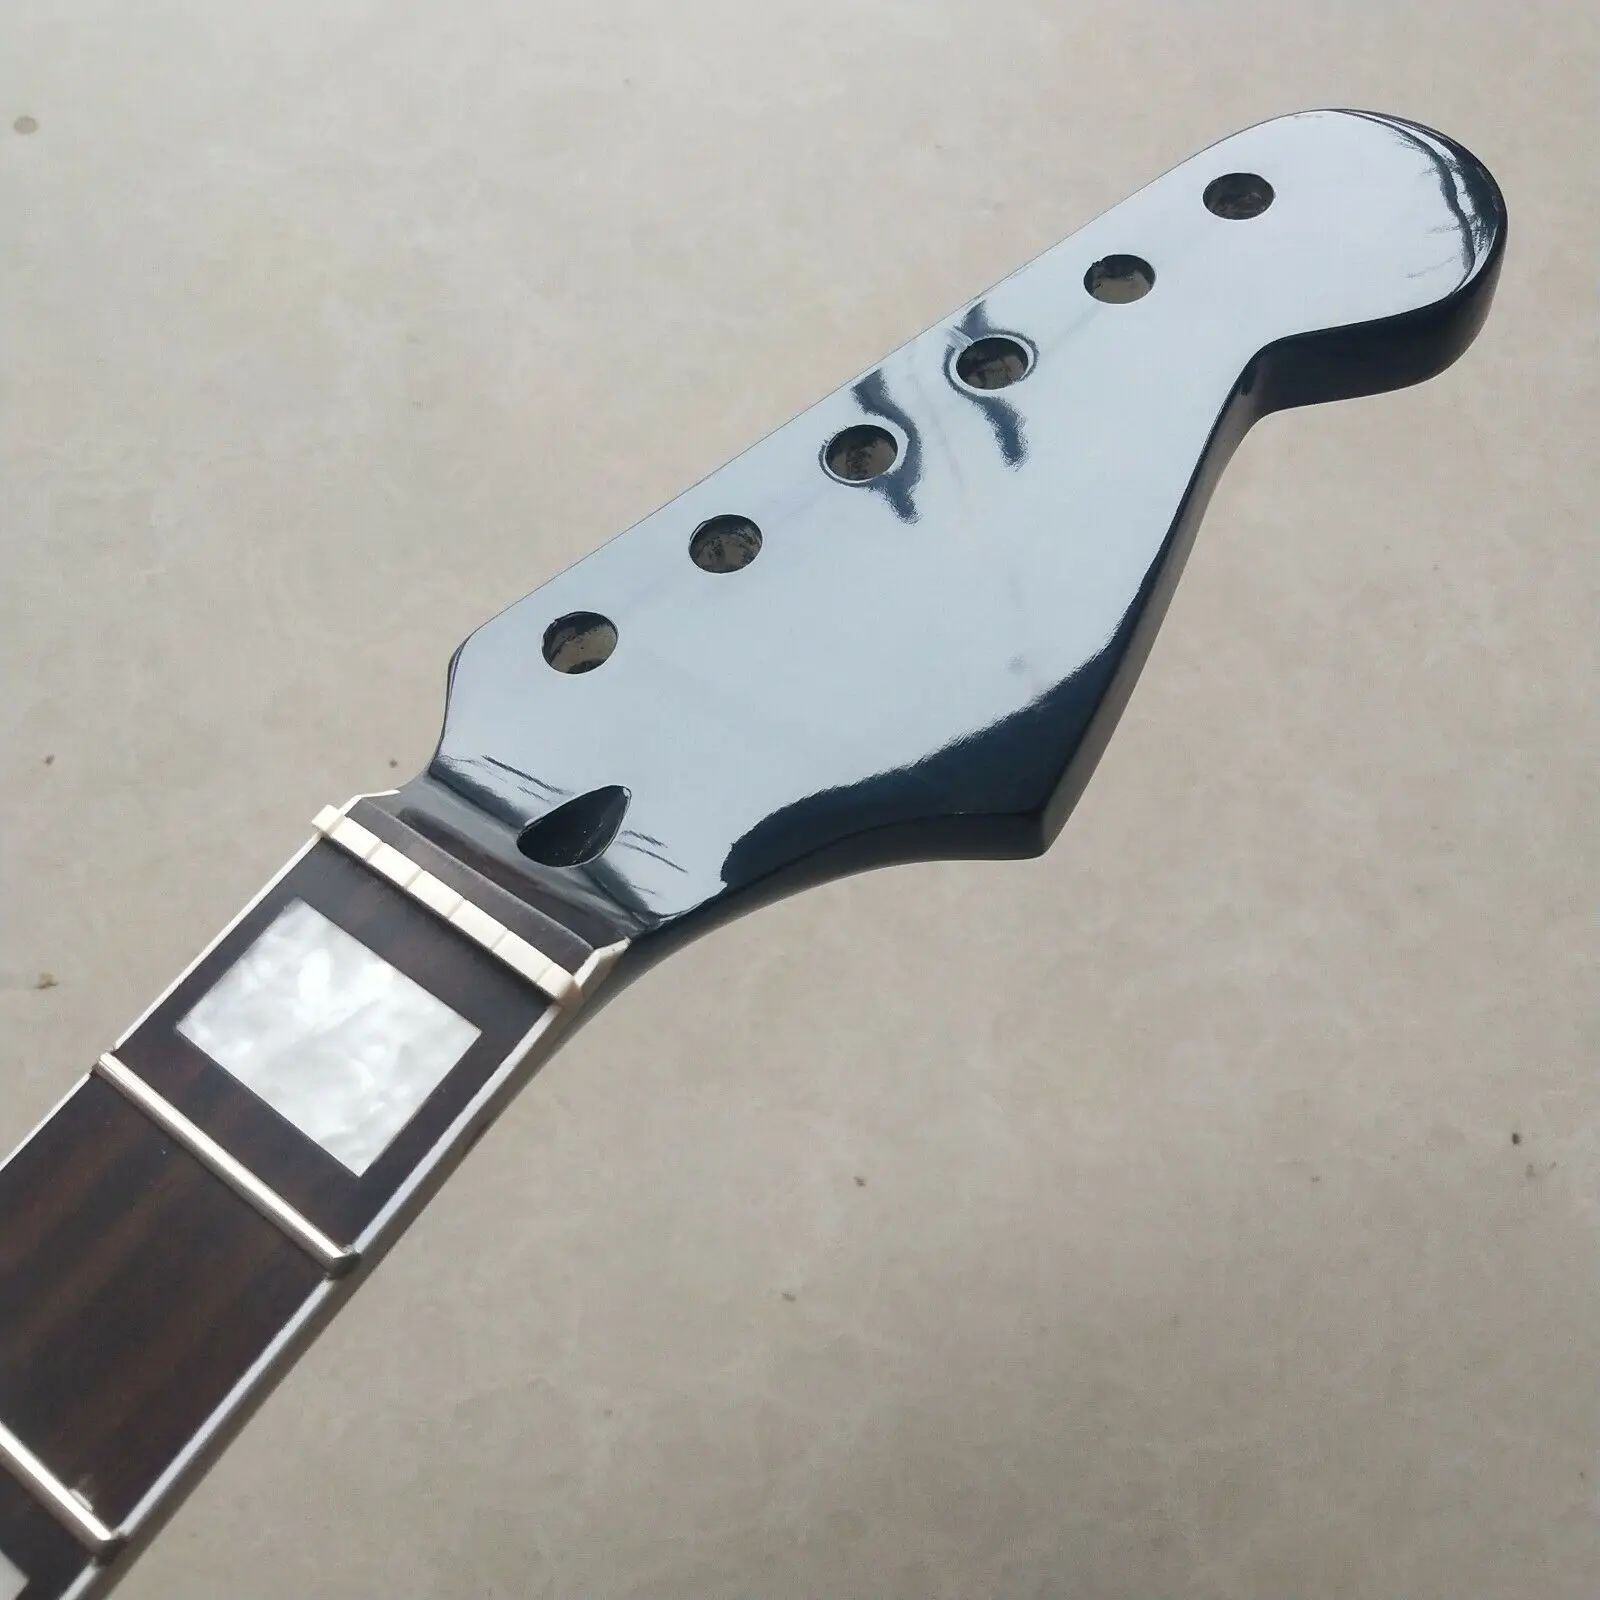 Black Maple Guitar neck 22 fret 25.5